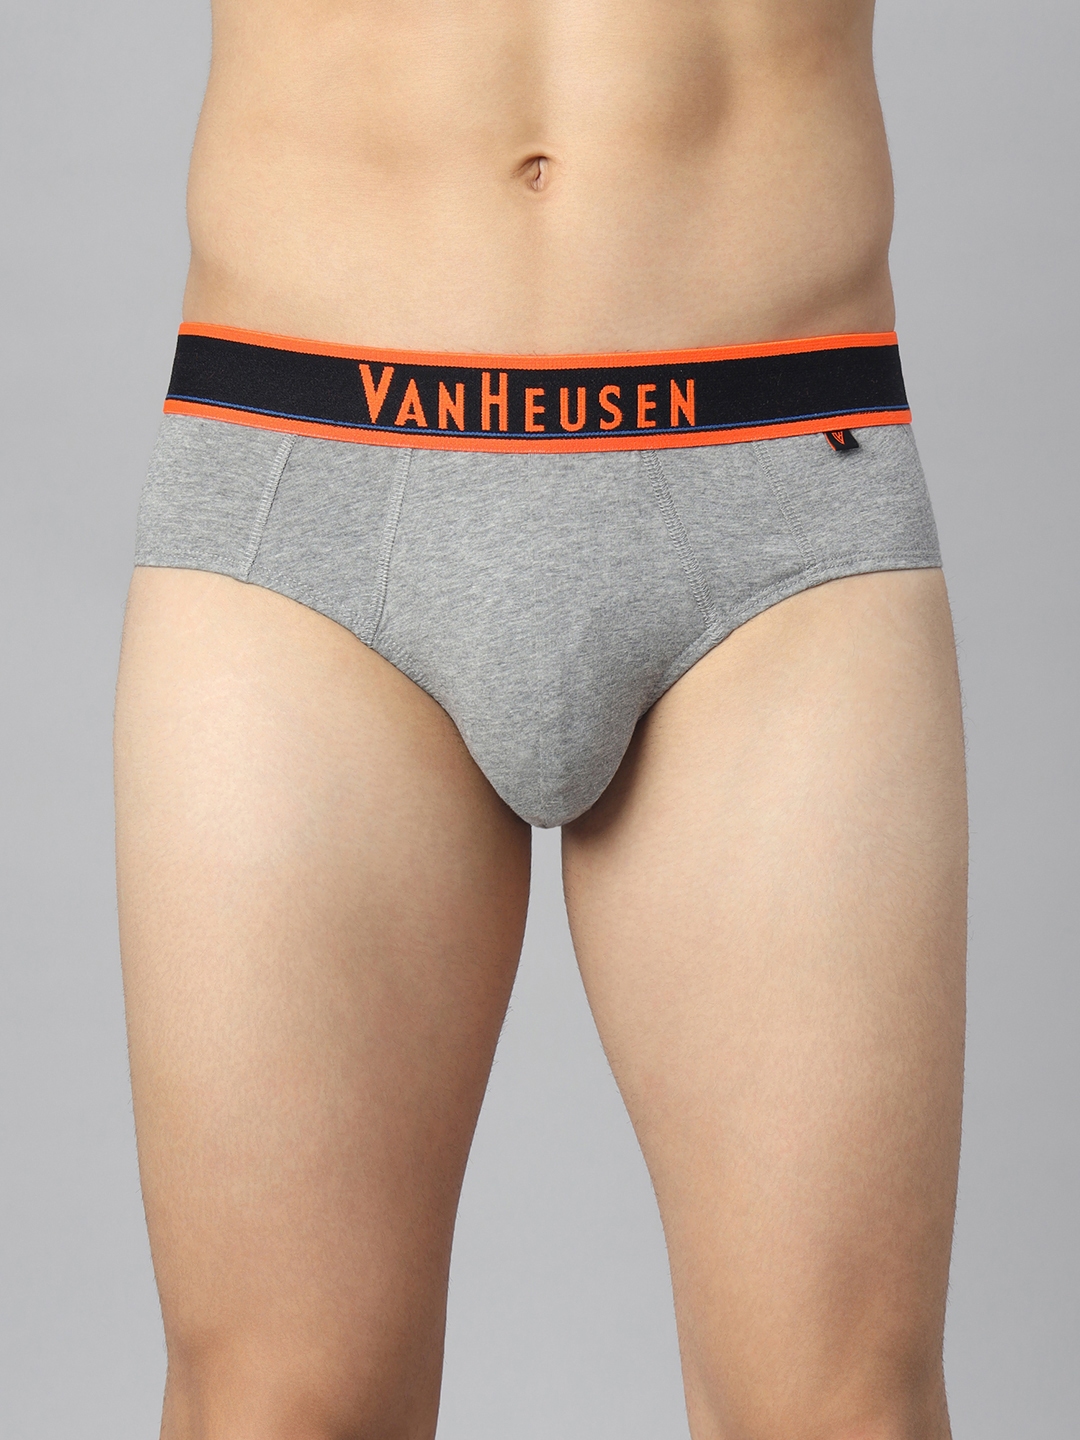 Buy Van Heusen Innerwear Men Colour Fresh & Elasticized Waistband